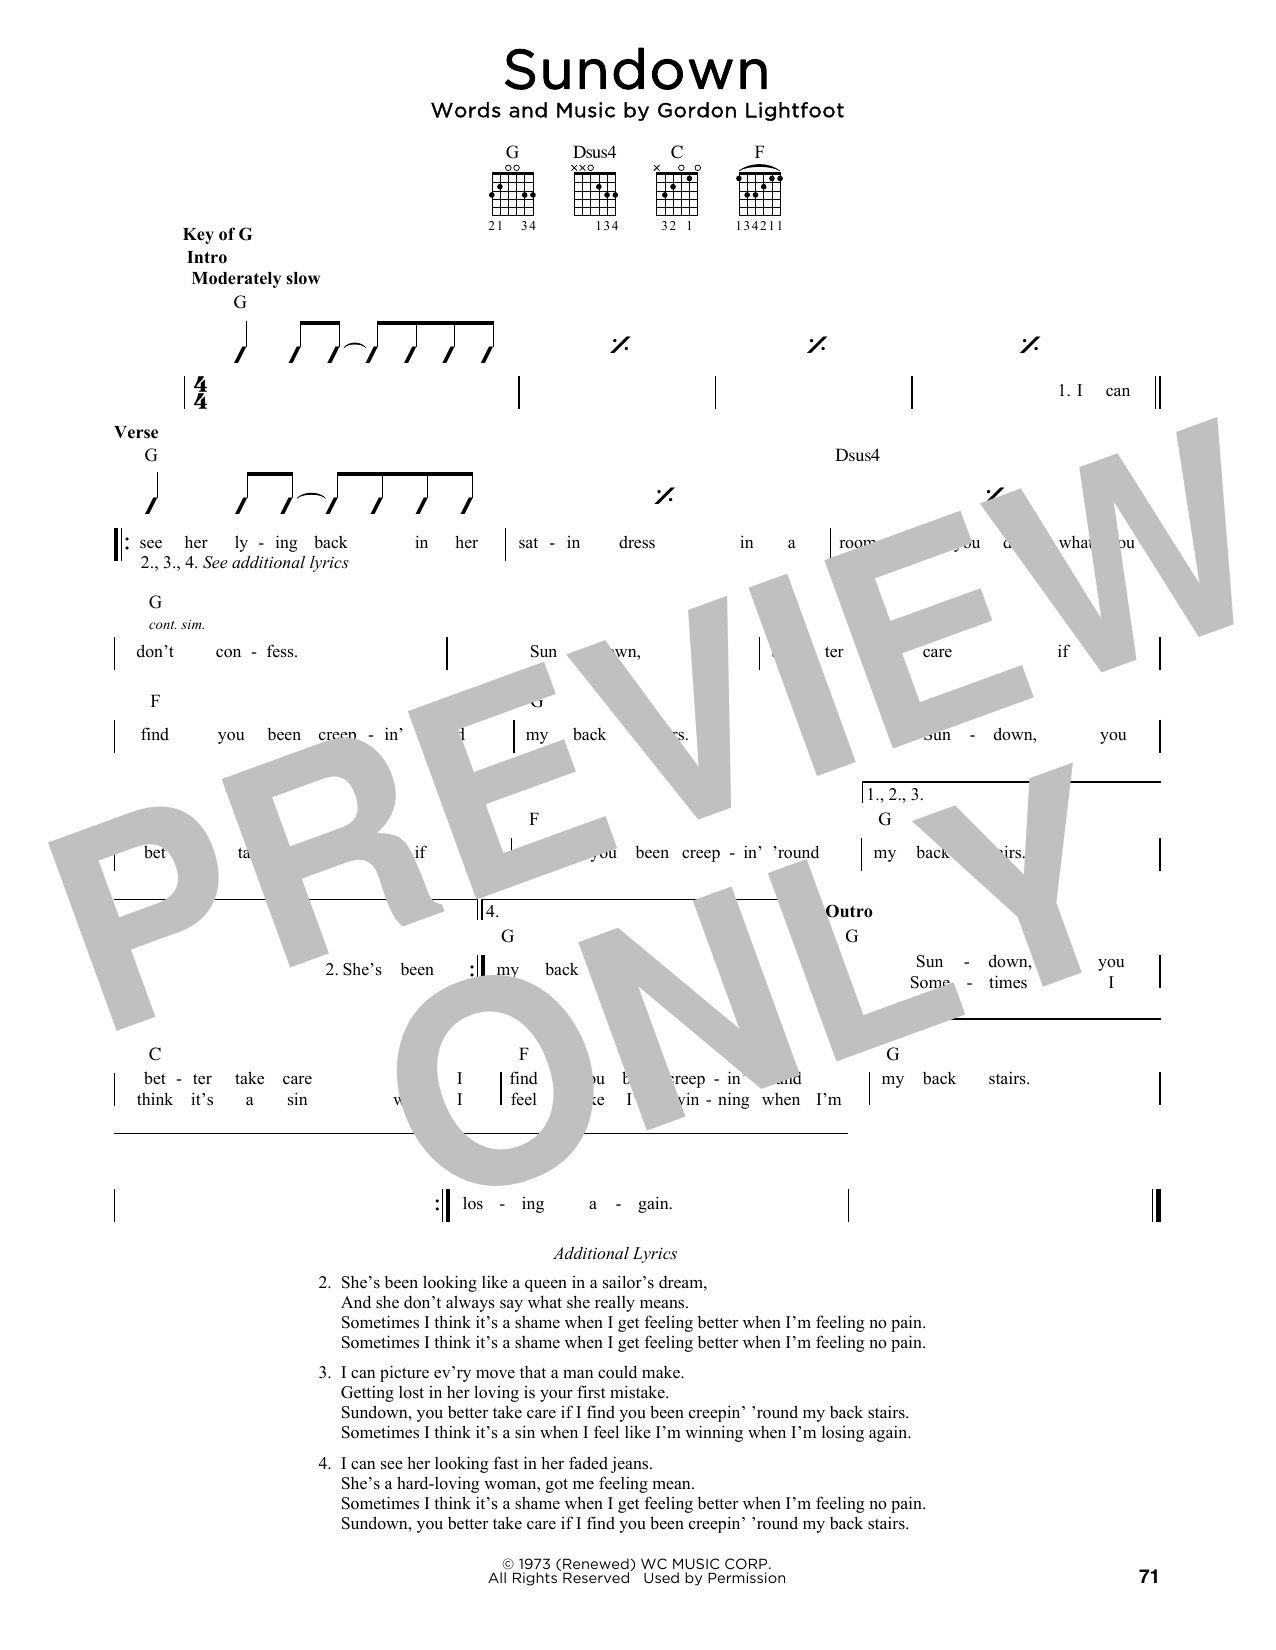 Gordon Lightfoot Sundown Sheet Music Notes & Chords for Real Book – Melody, Lyrics & Chords - Download or Print PDF